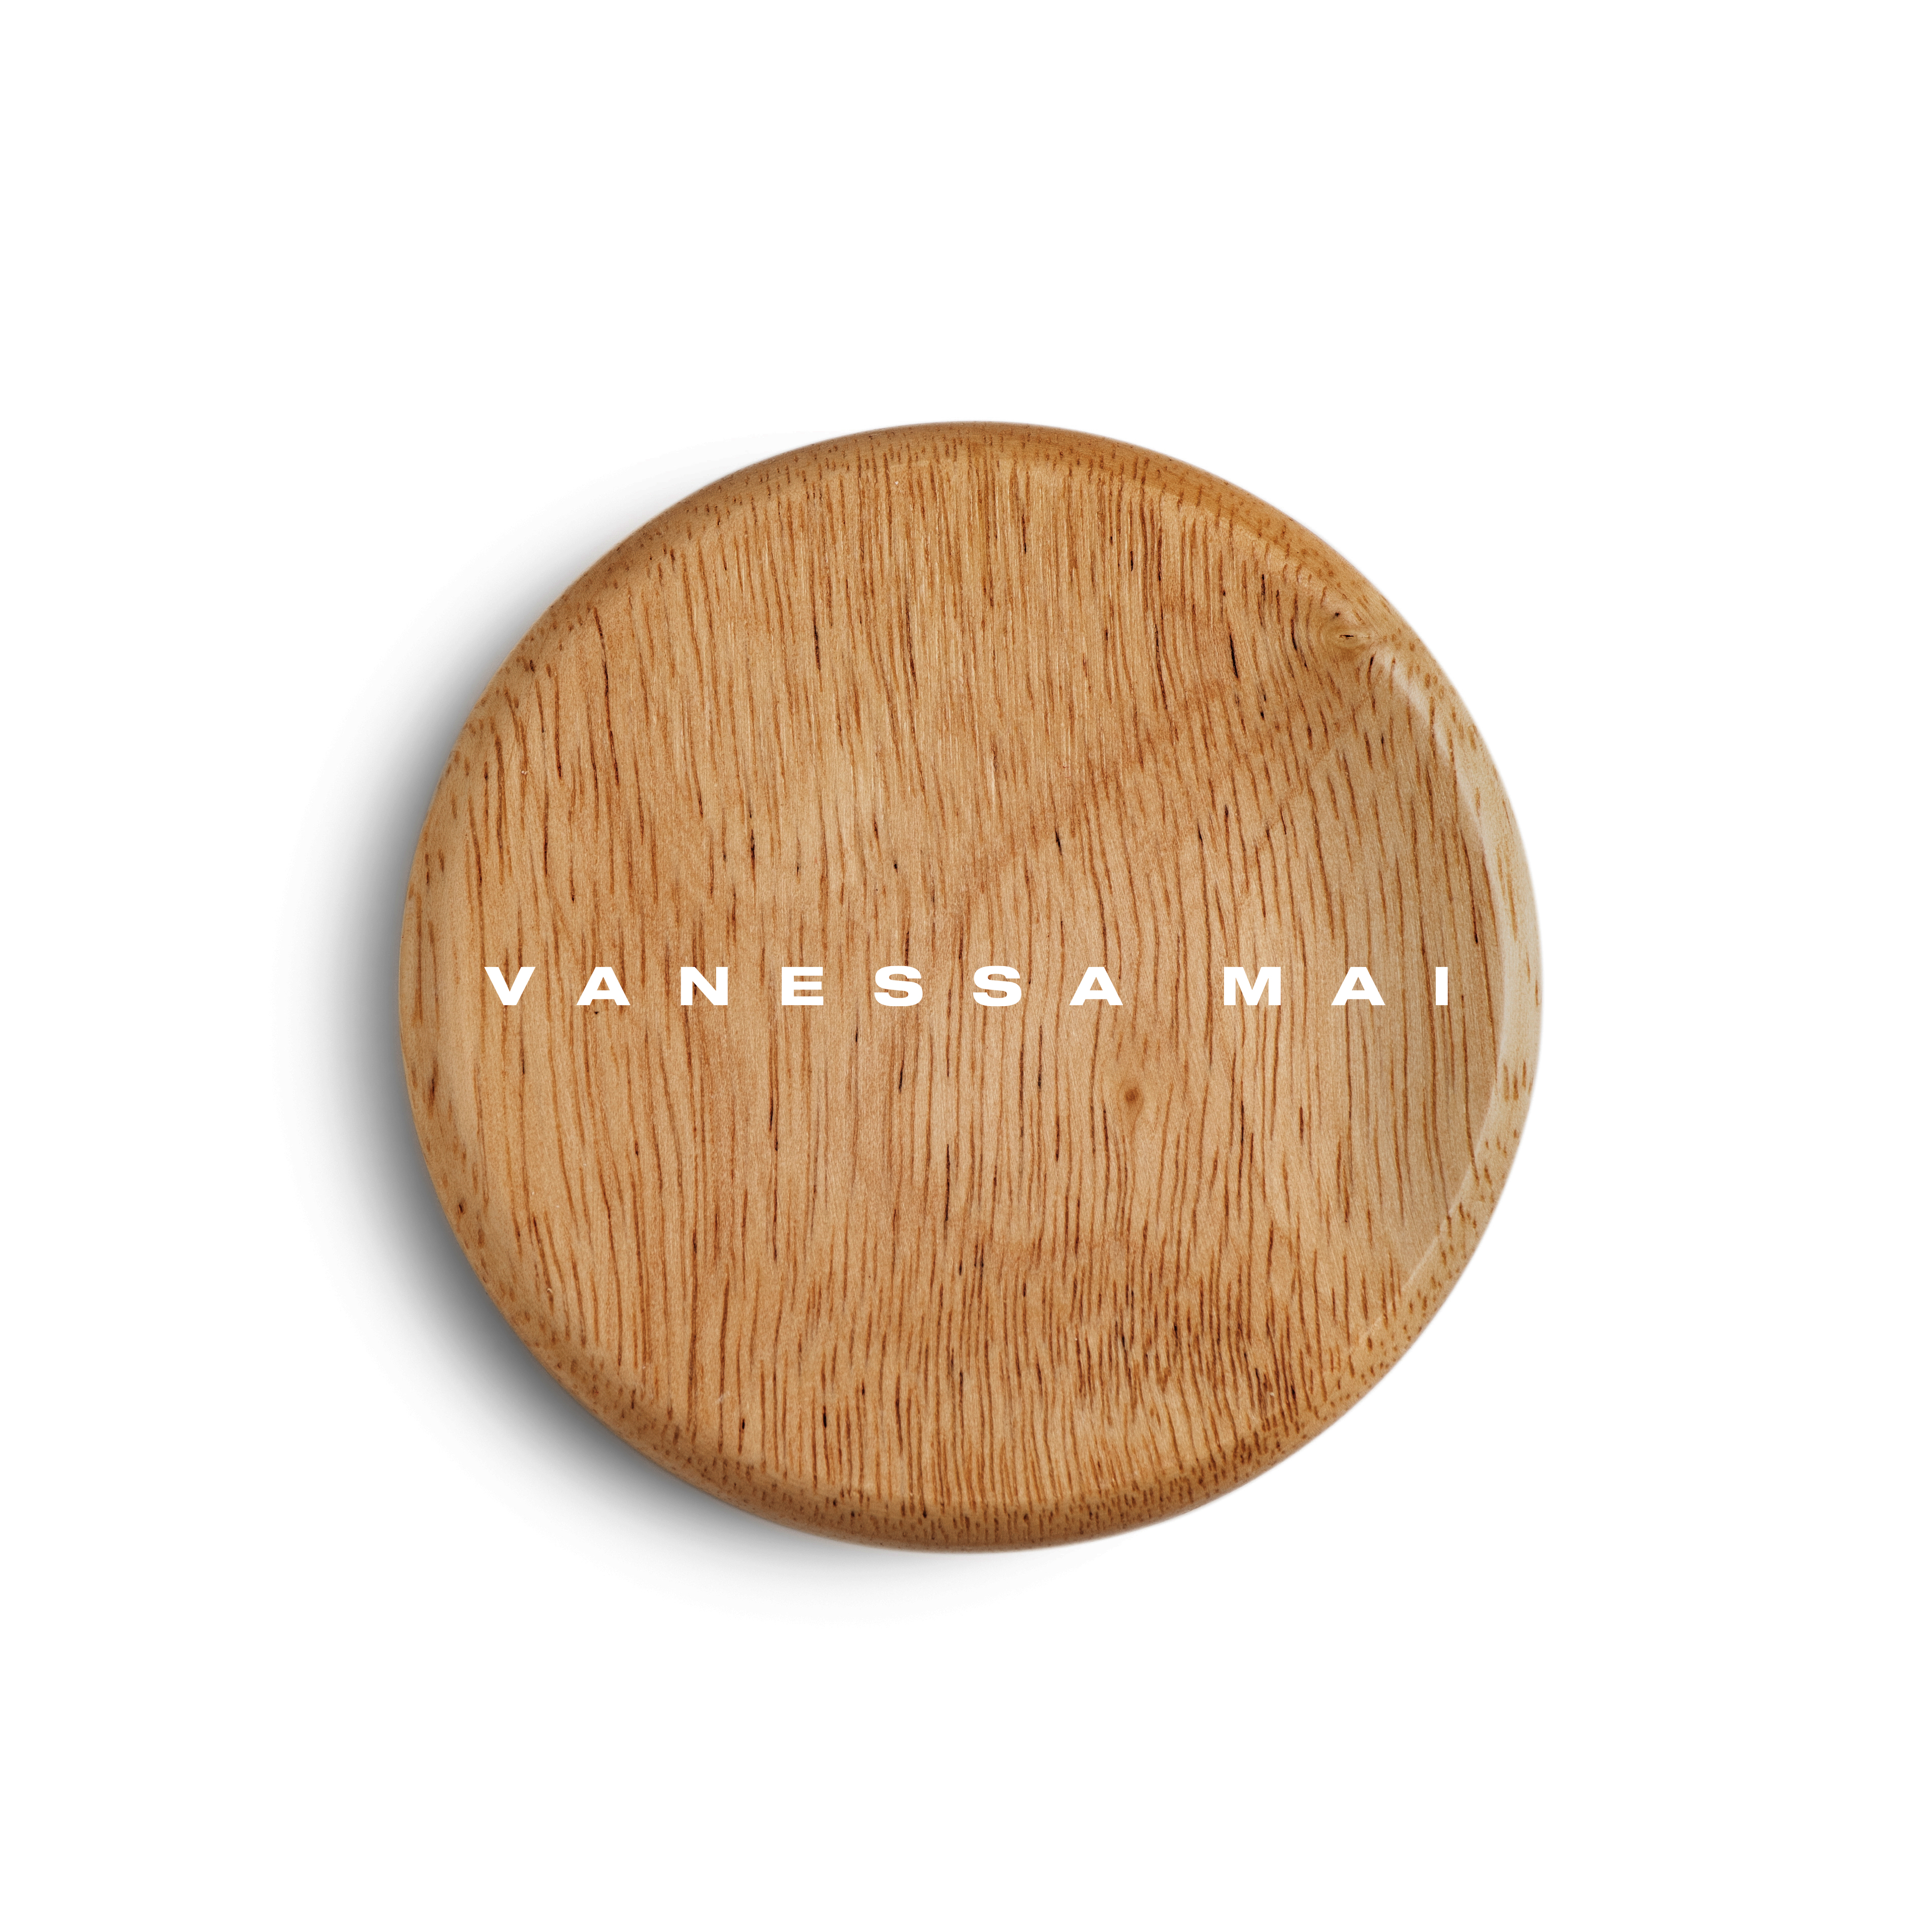 Vanessa Mai Metamorphose - (CD) - (Box)